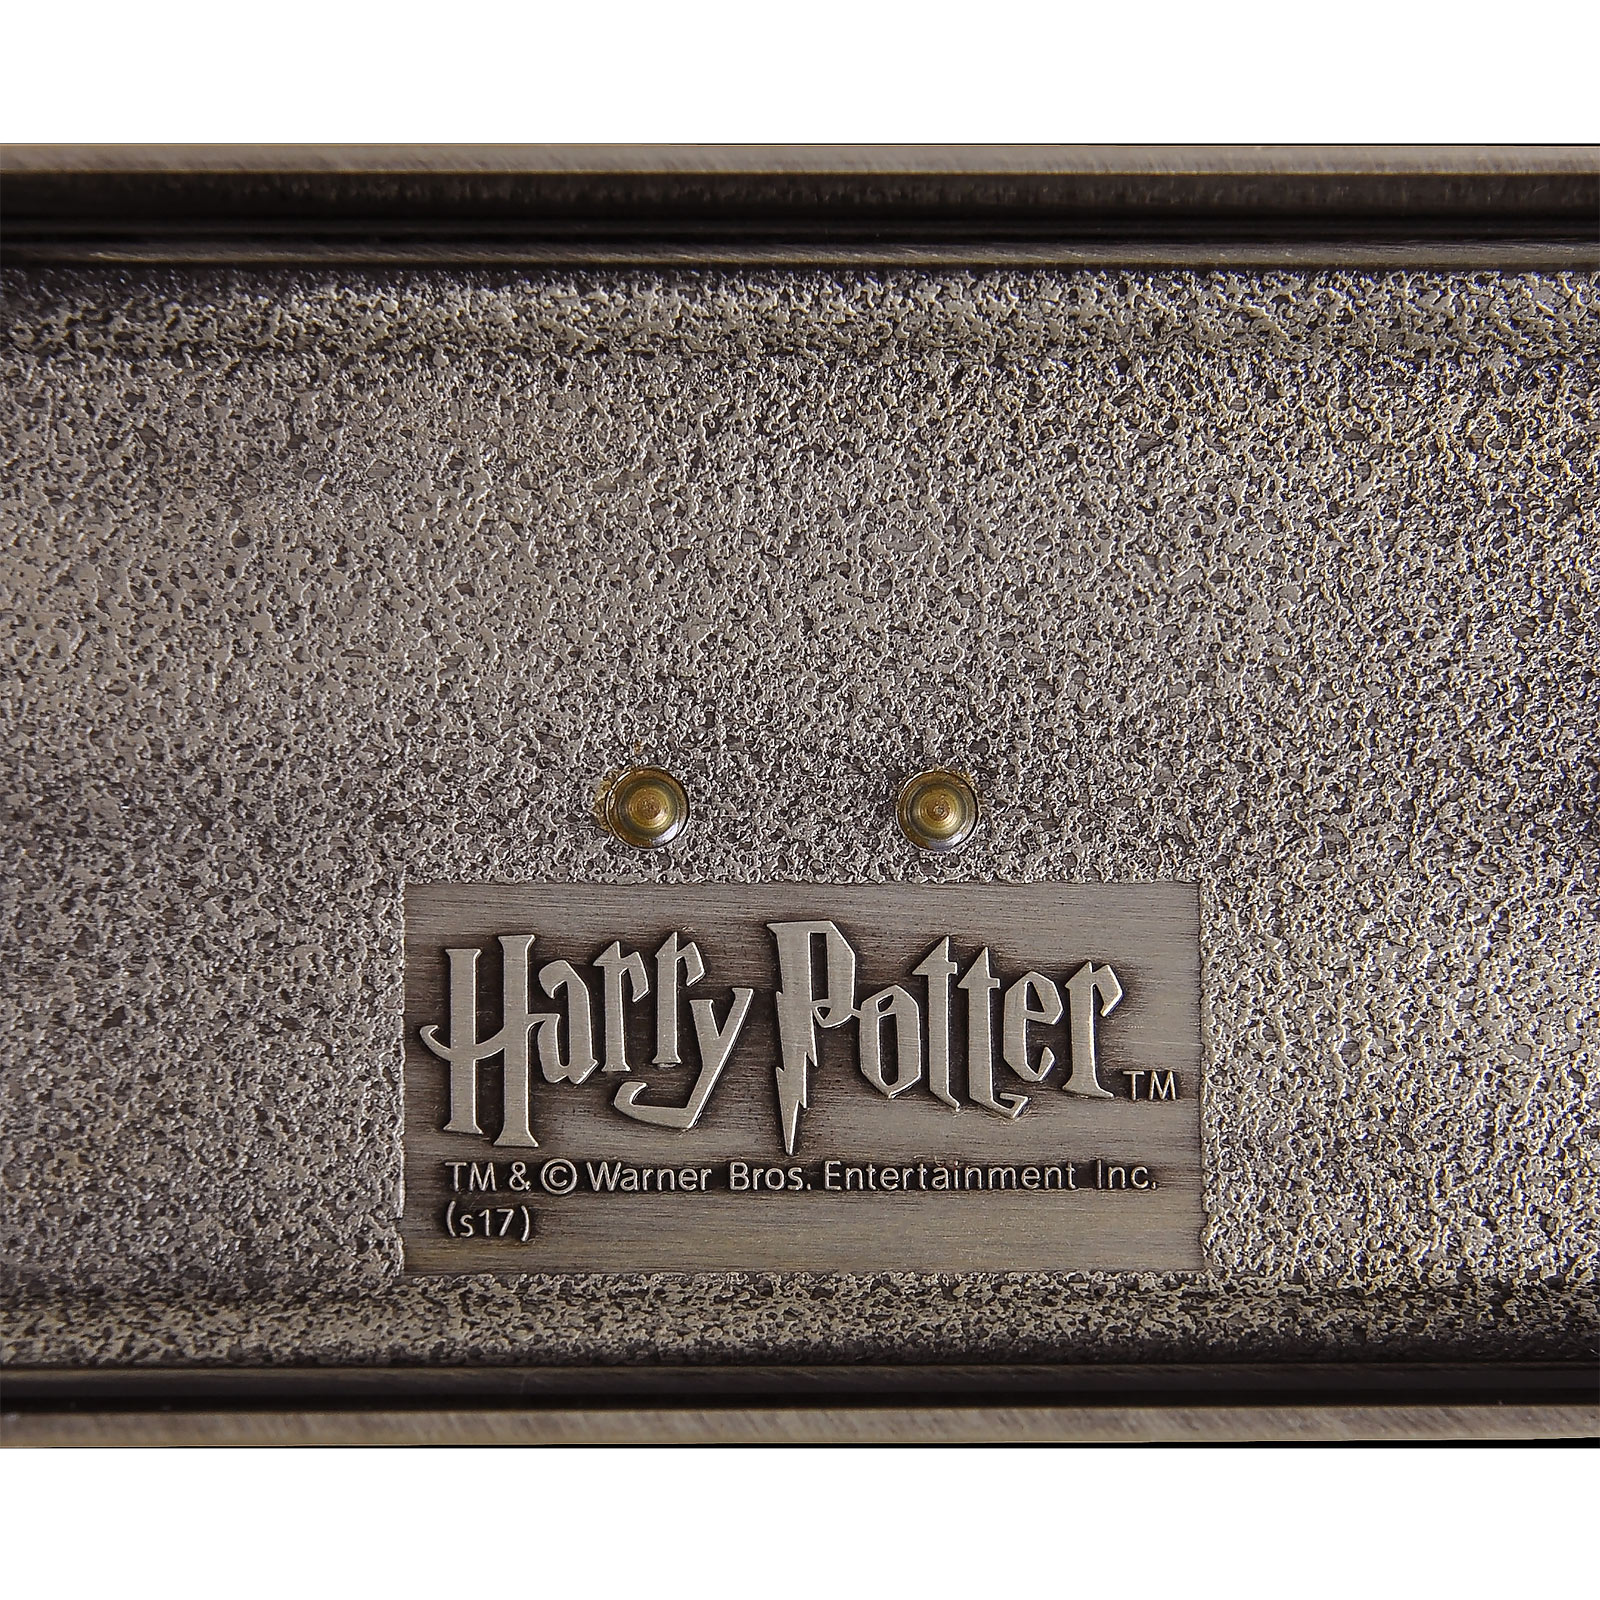 Harry Potter - Porte-baguette Hufflepuff